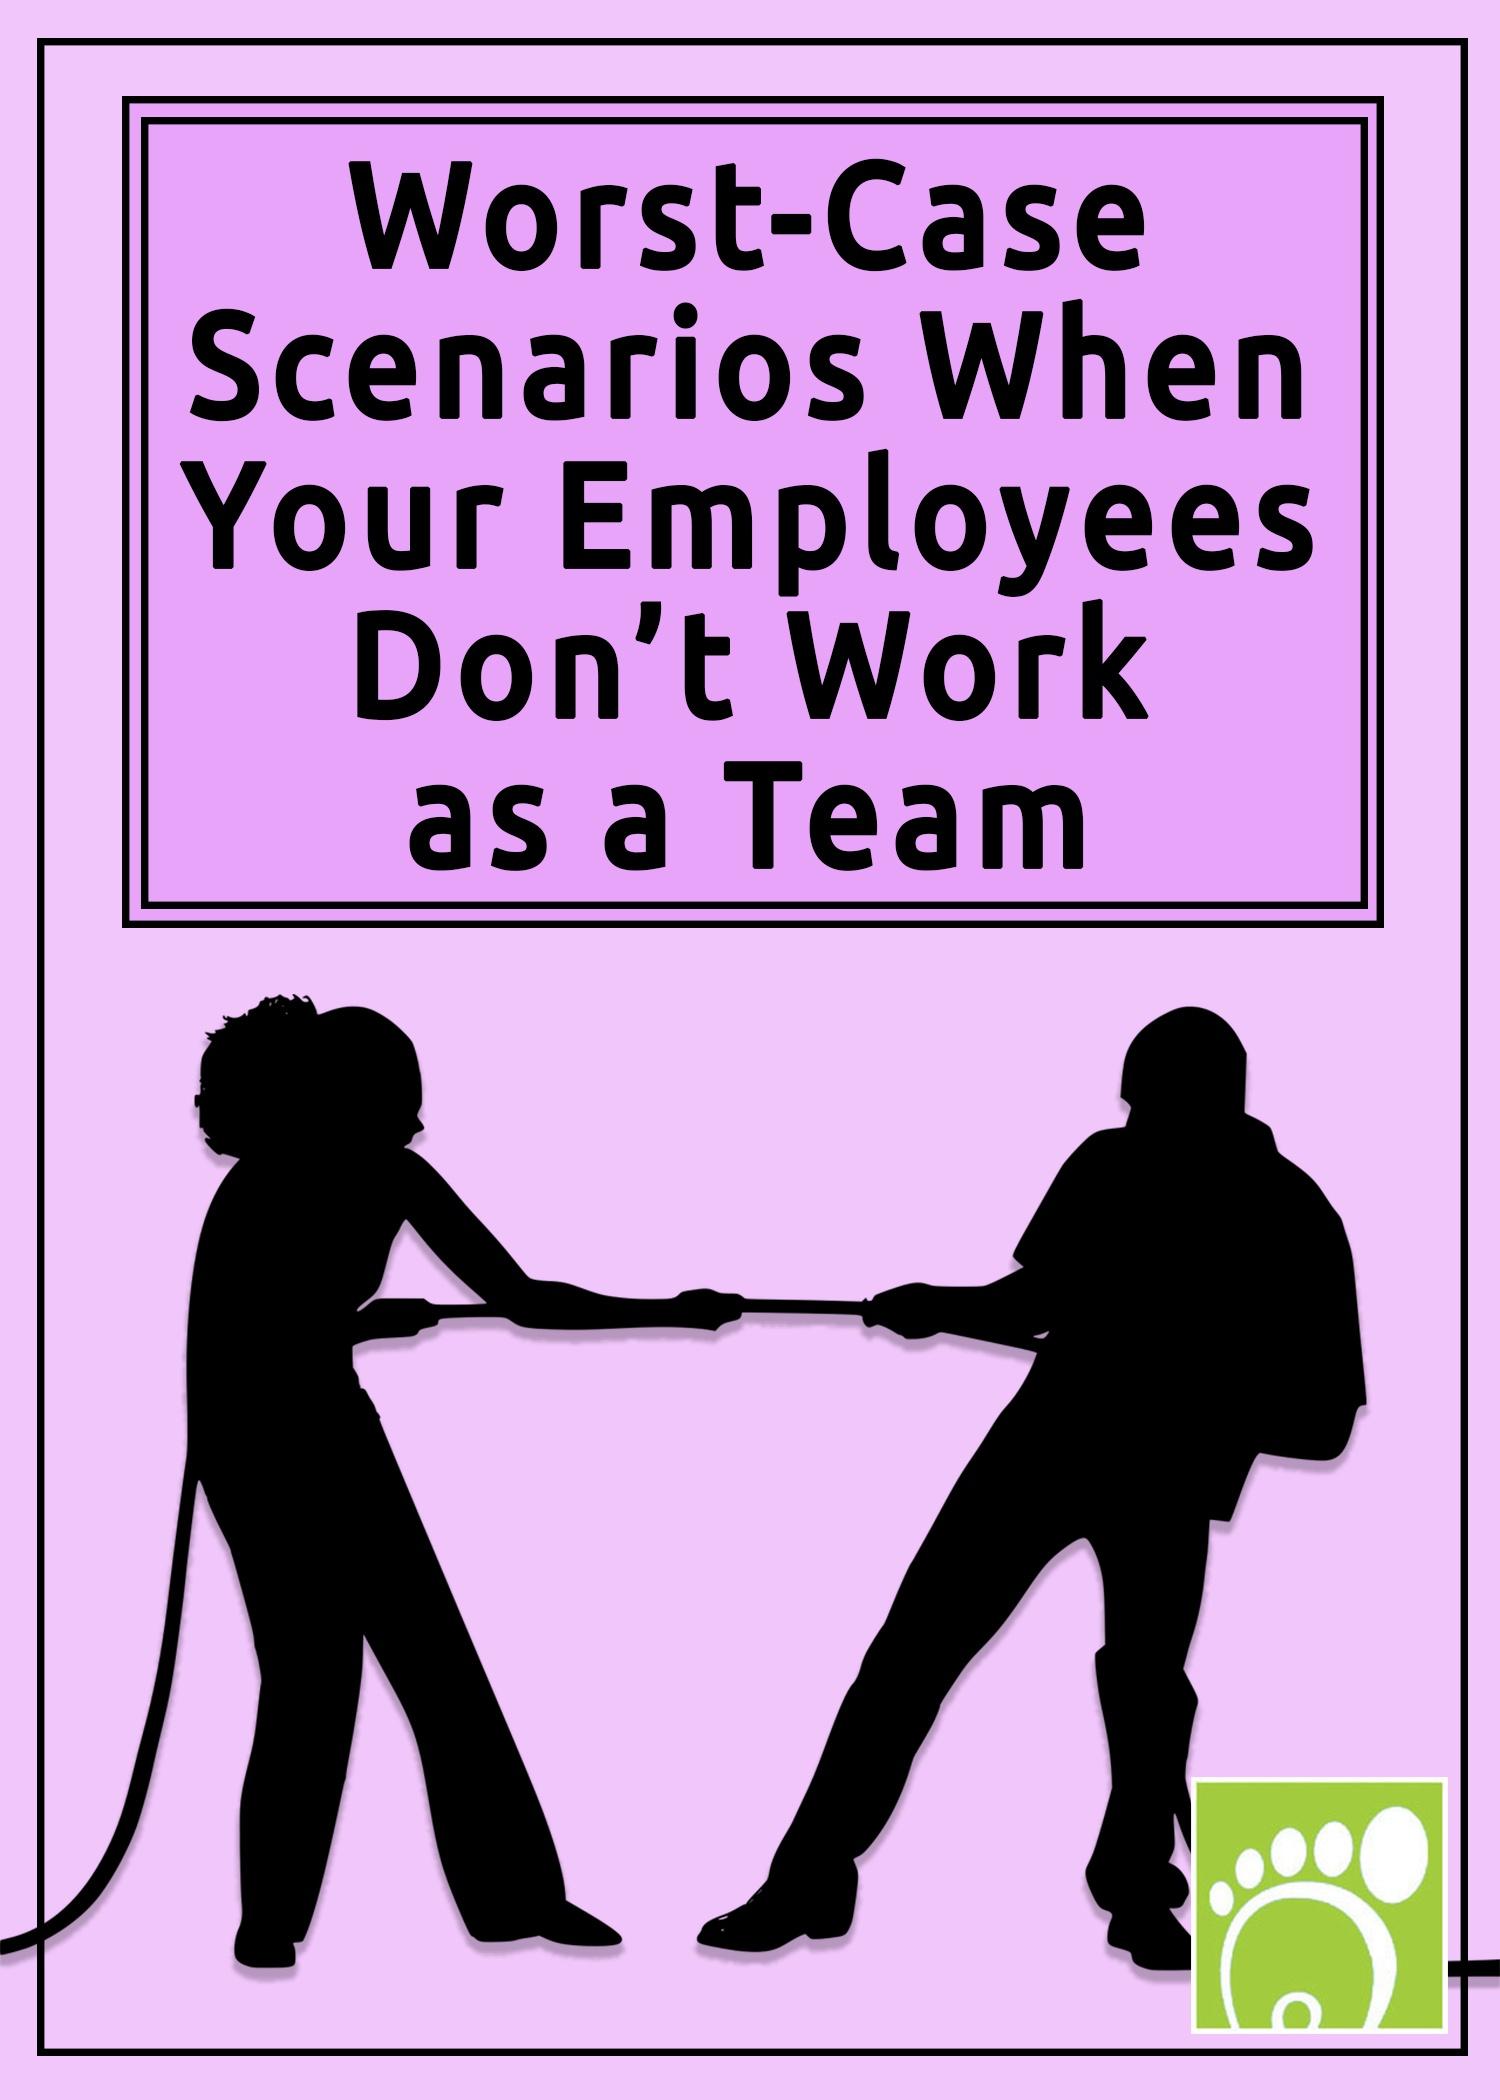 Worst-Case Scenarios When your Employees Don’t Work as a Team